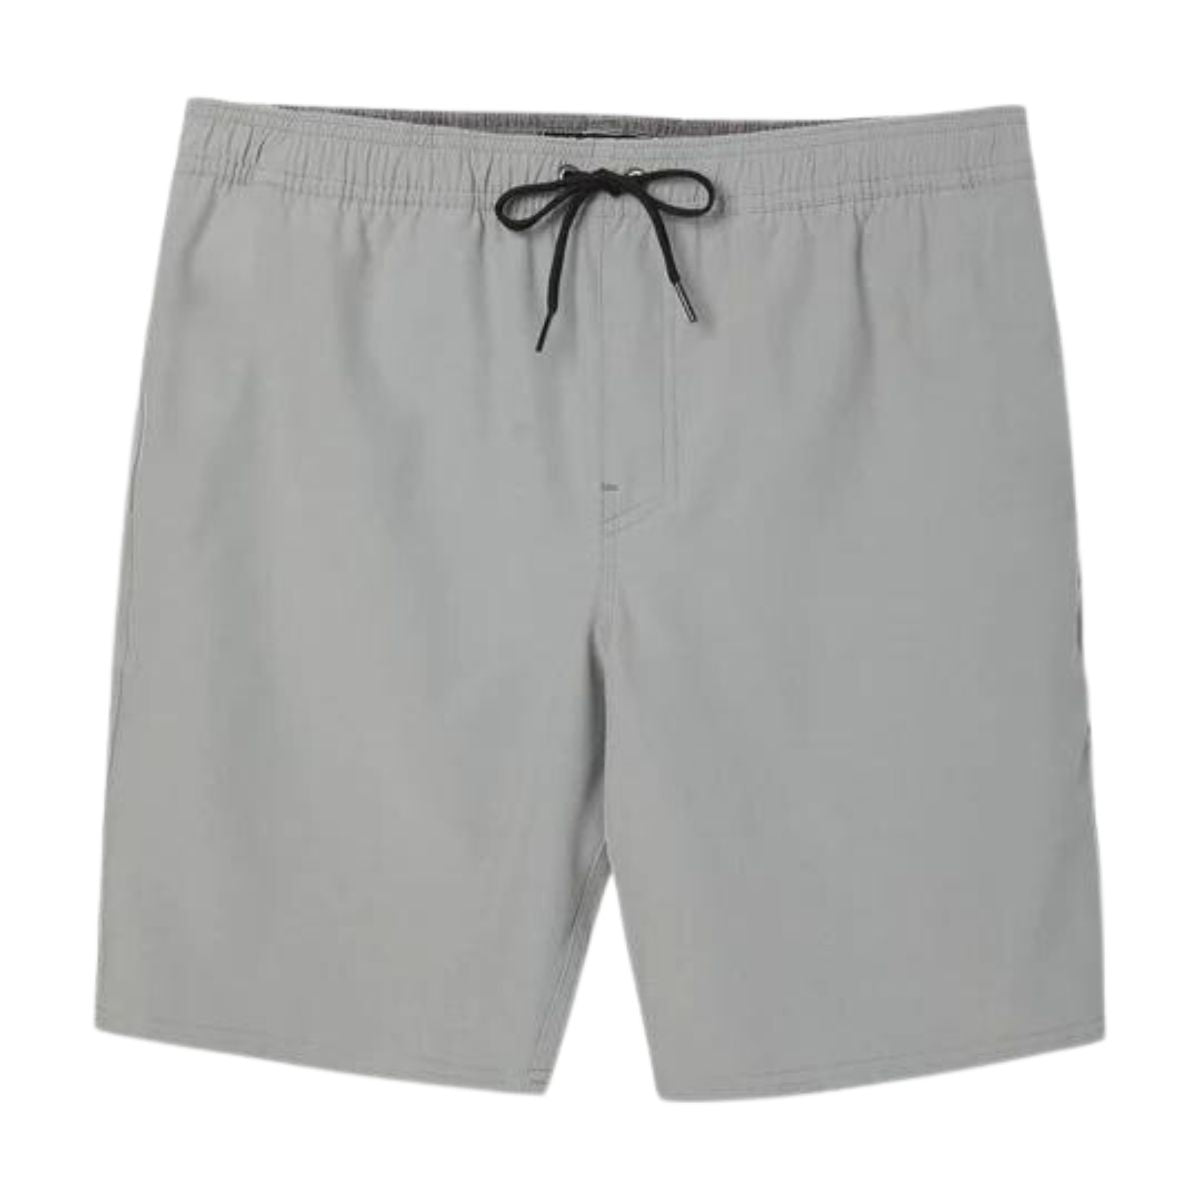 O'Neill Reserve E-Waist Shorts in Light Grey - BoardCo